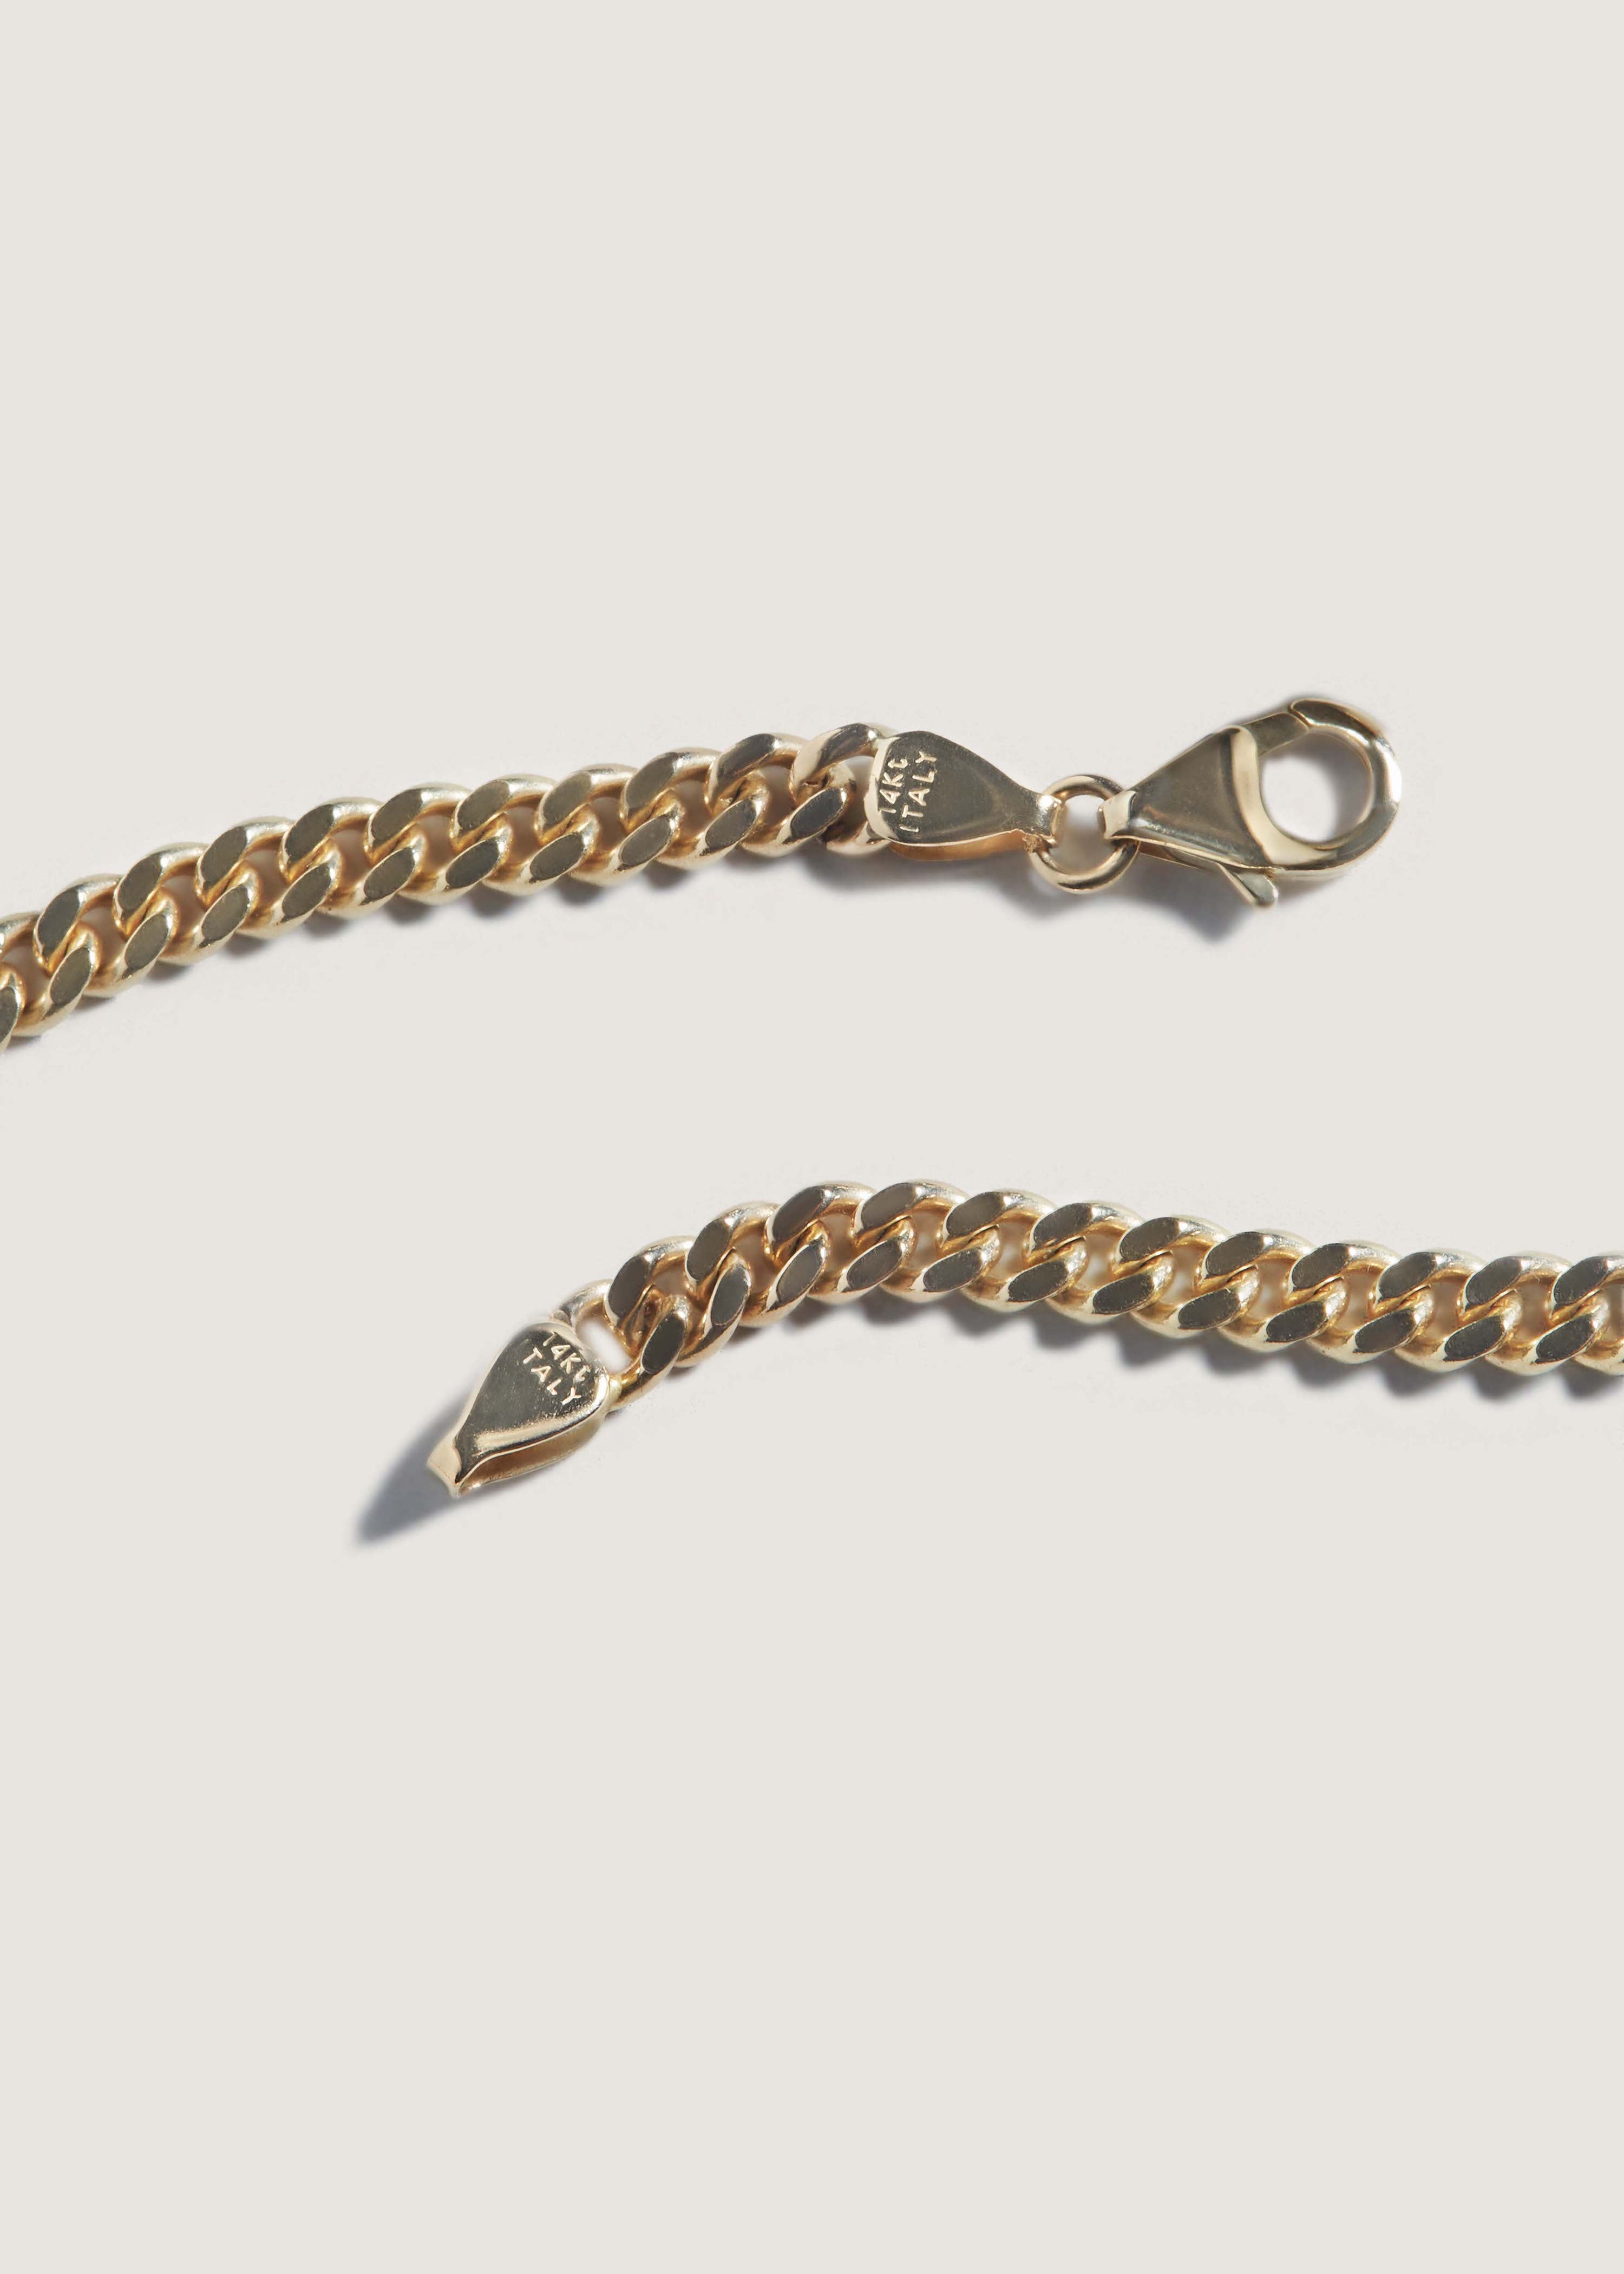 alt="close up of clasp of Capri Curb Chain Necklace II"